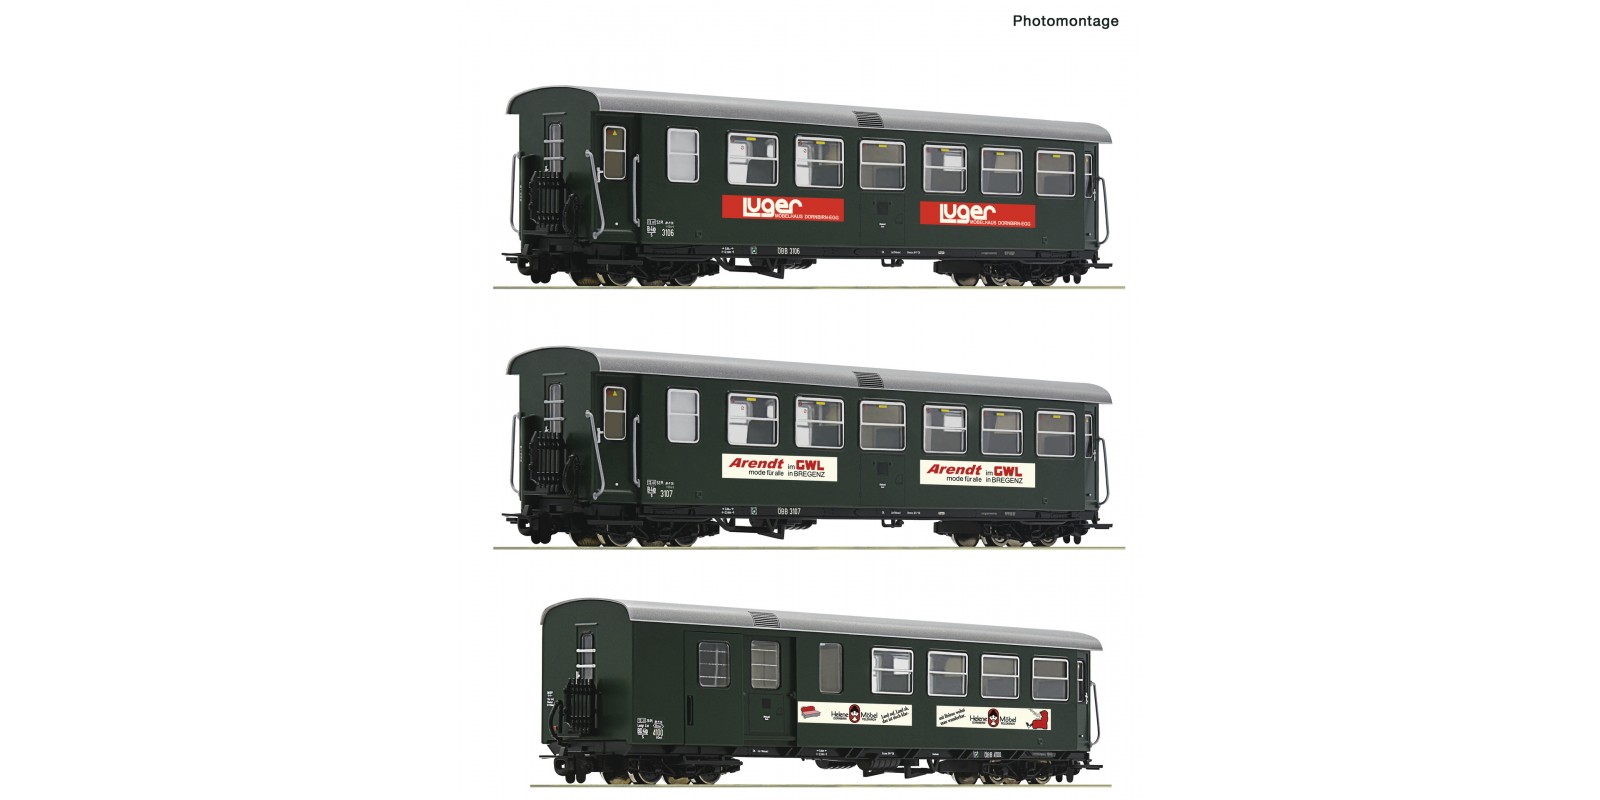 RO34034 3 piece set: Narrow-gauge passenger coaches, ÖBB